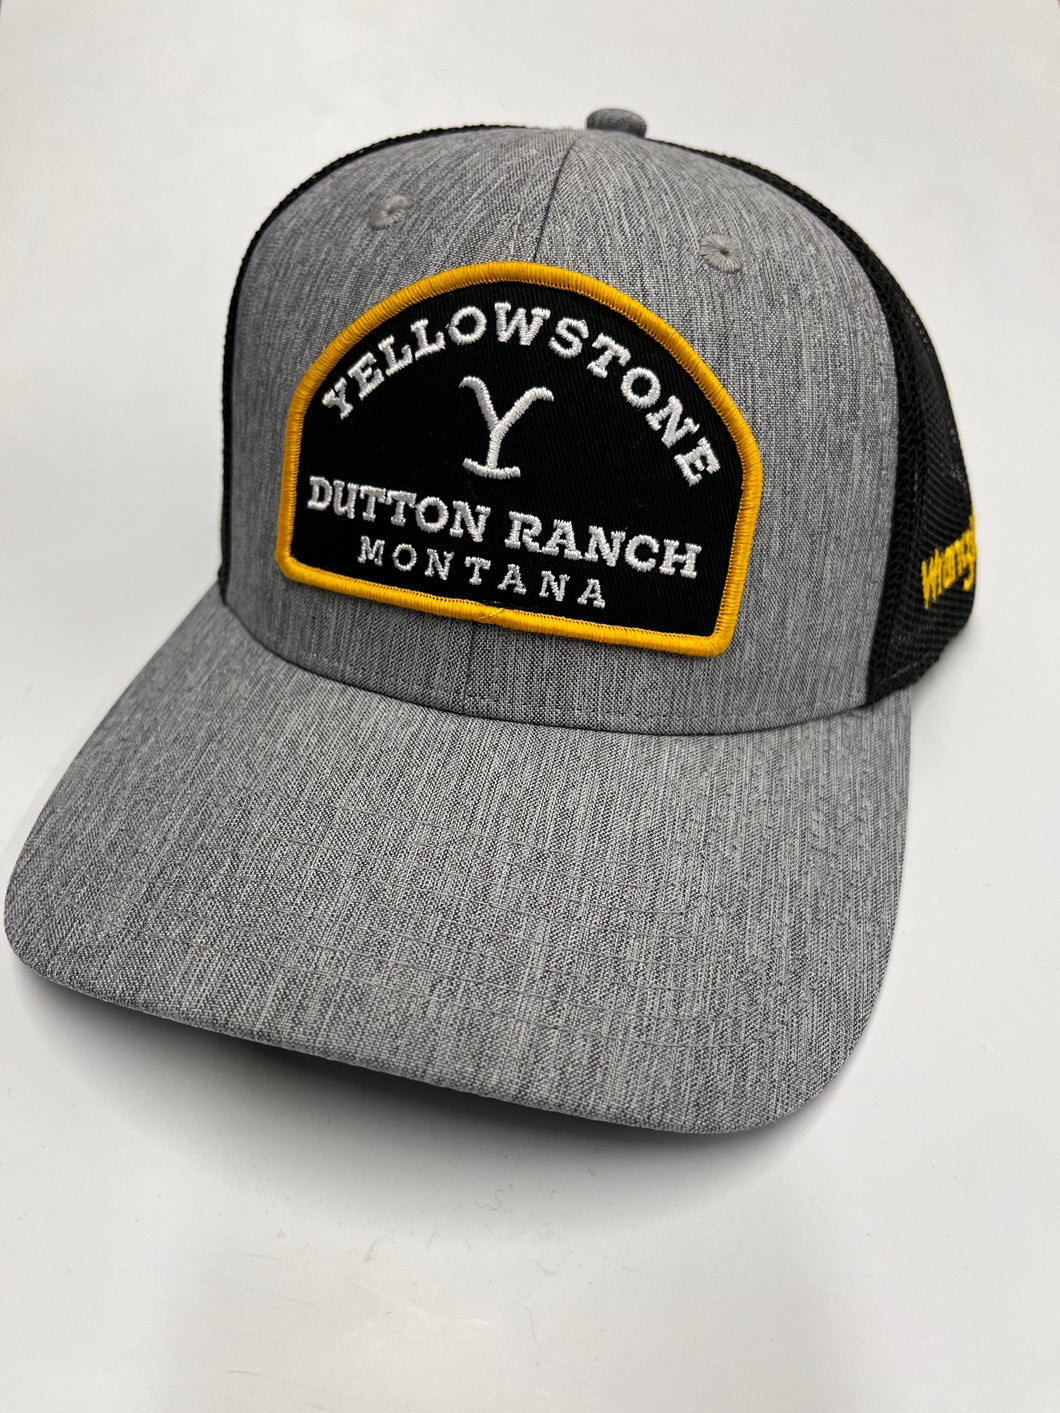 Yellowstone Dutton Ranch Cap